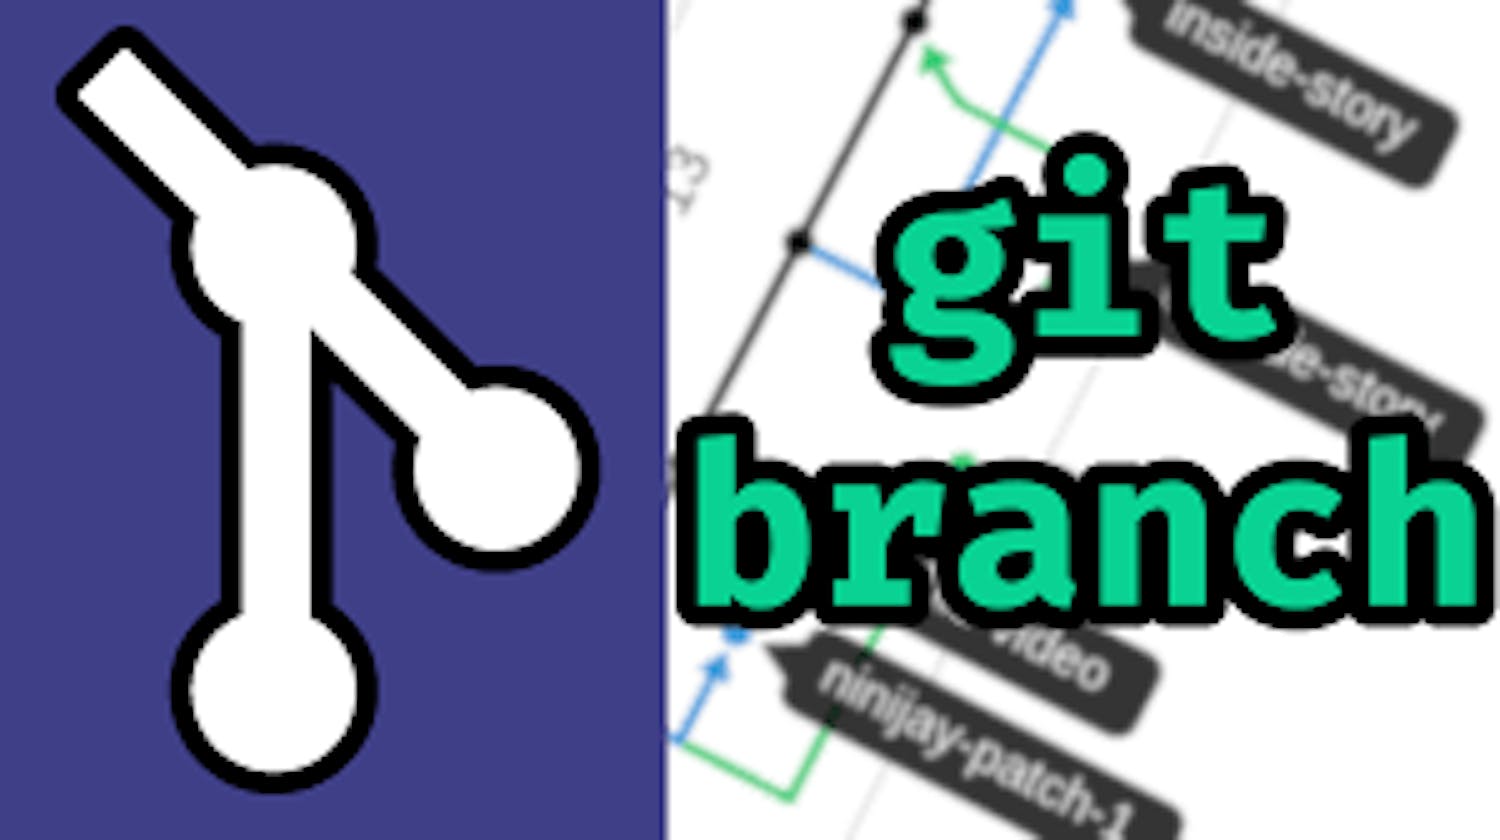 Understanding Git Branching and Merging